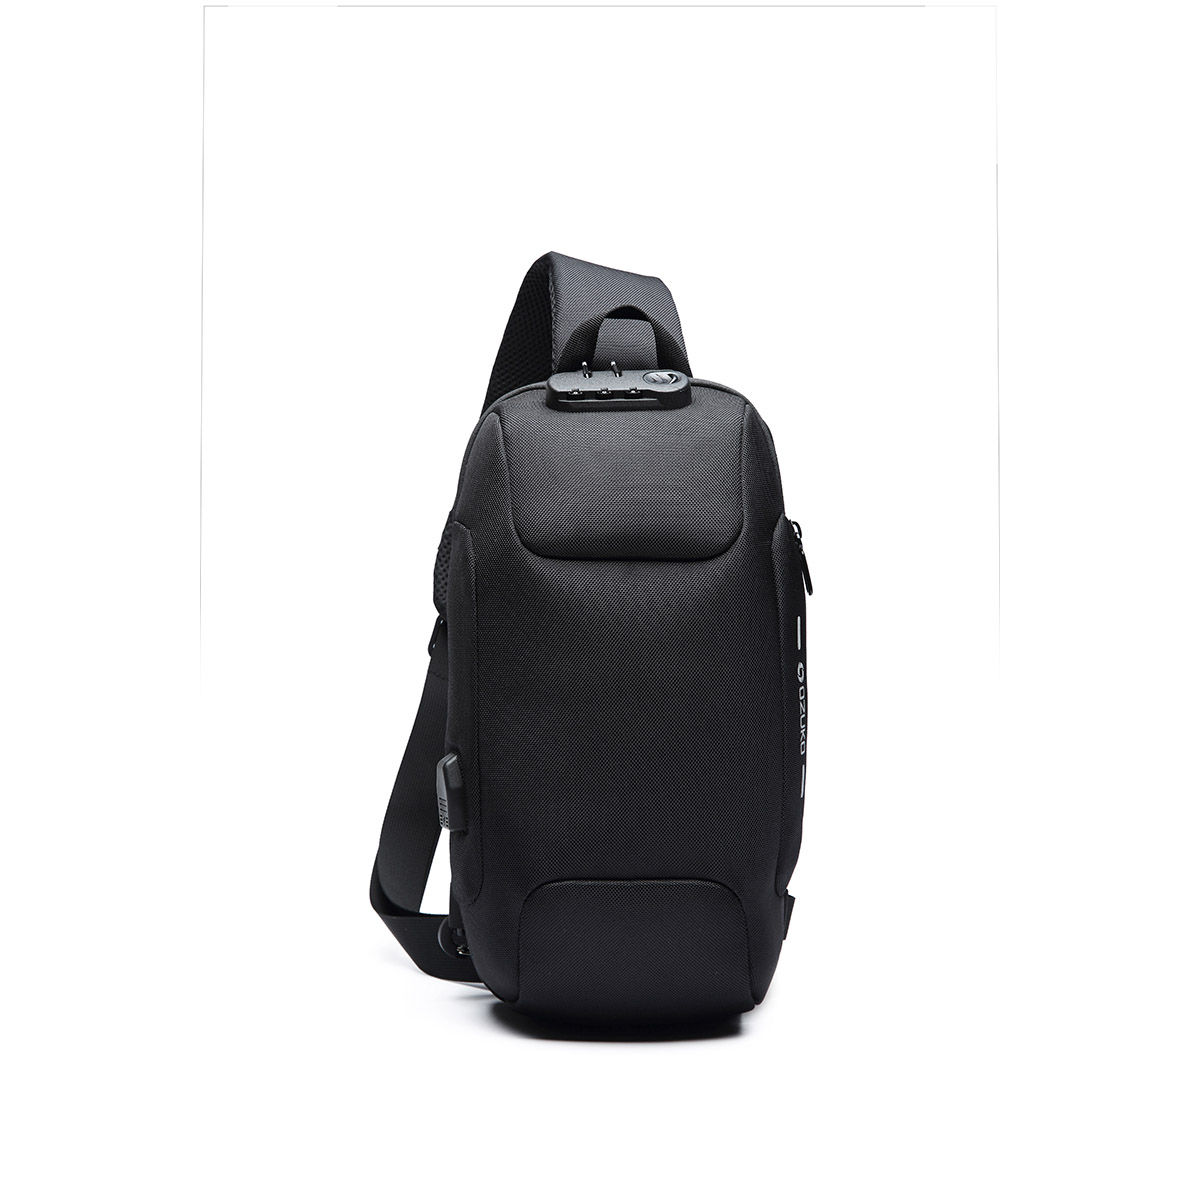 Ozuko 9223 Range Black Color Soft Case Backpack: Buy Ozuko 9223 Range ...